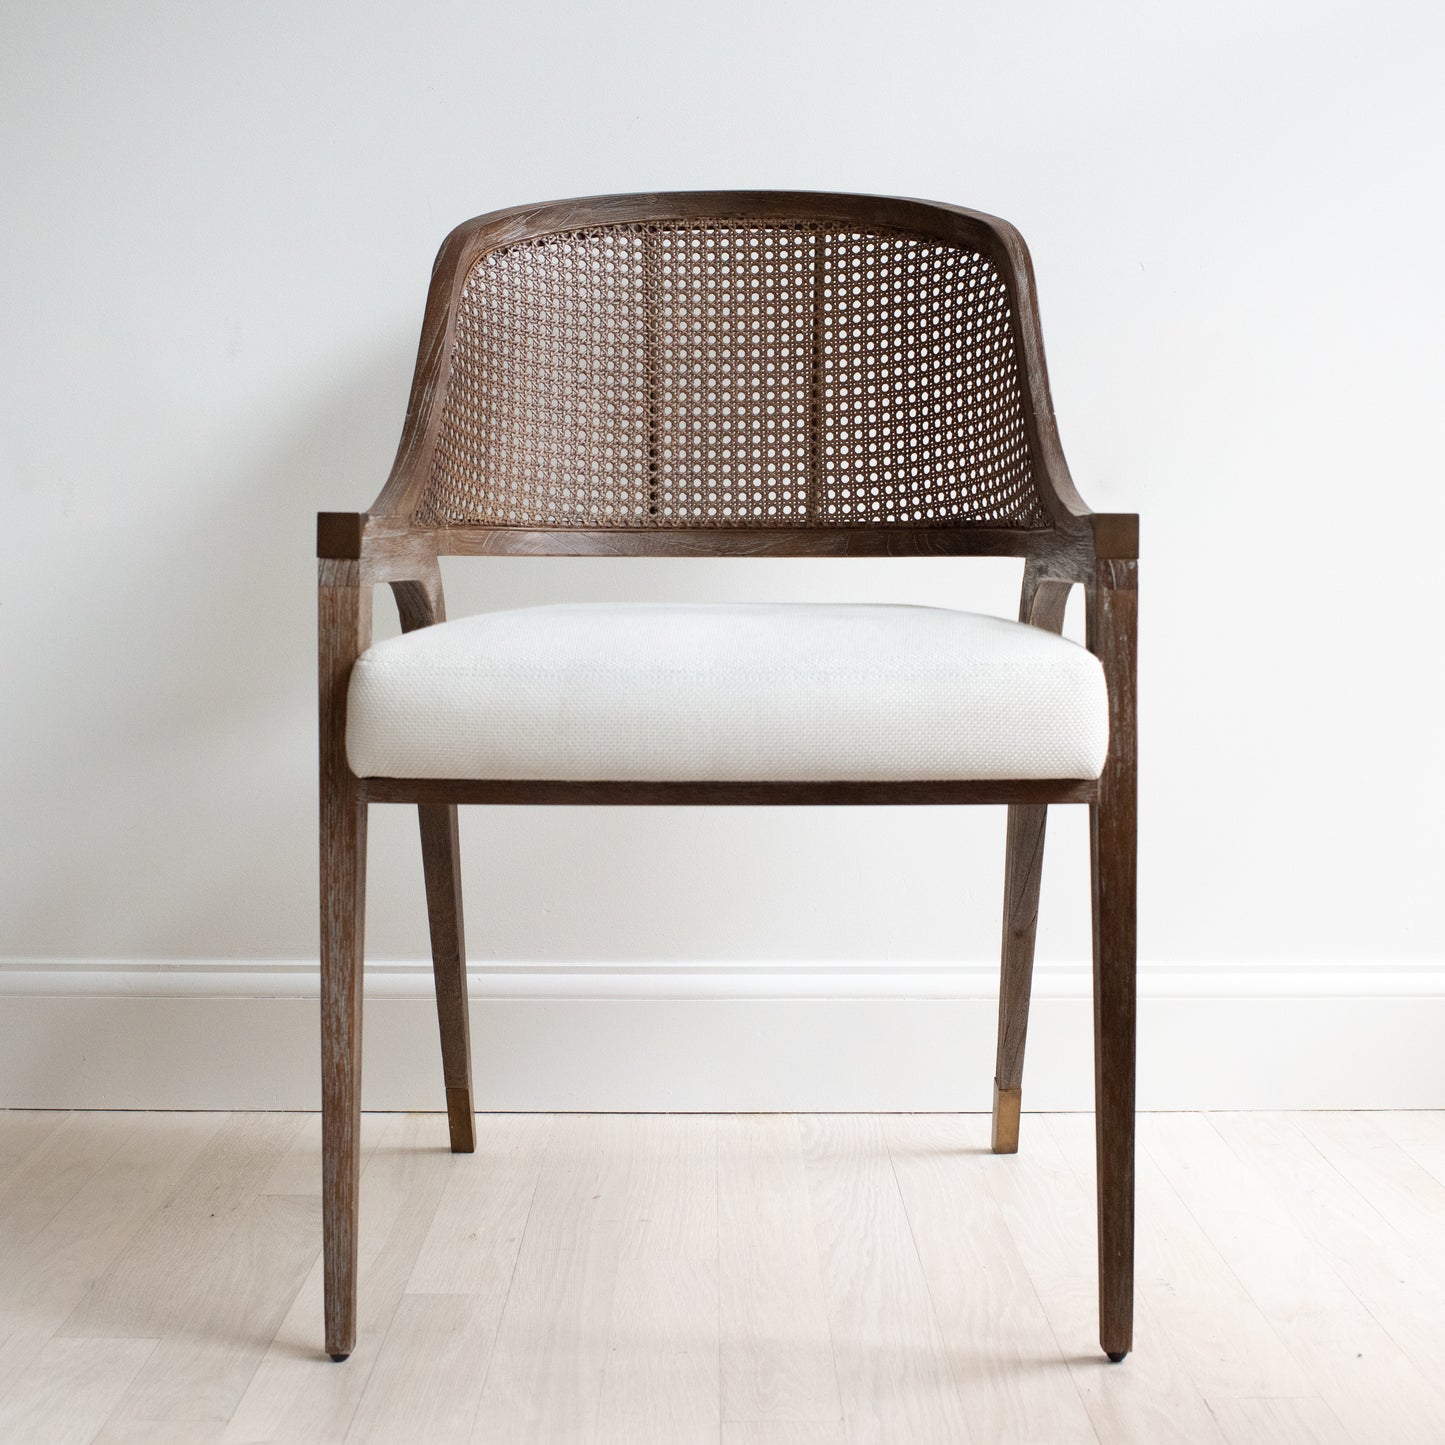 A-Frame Chair - Driftwood